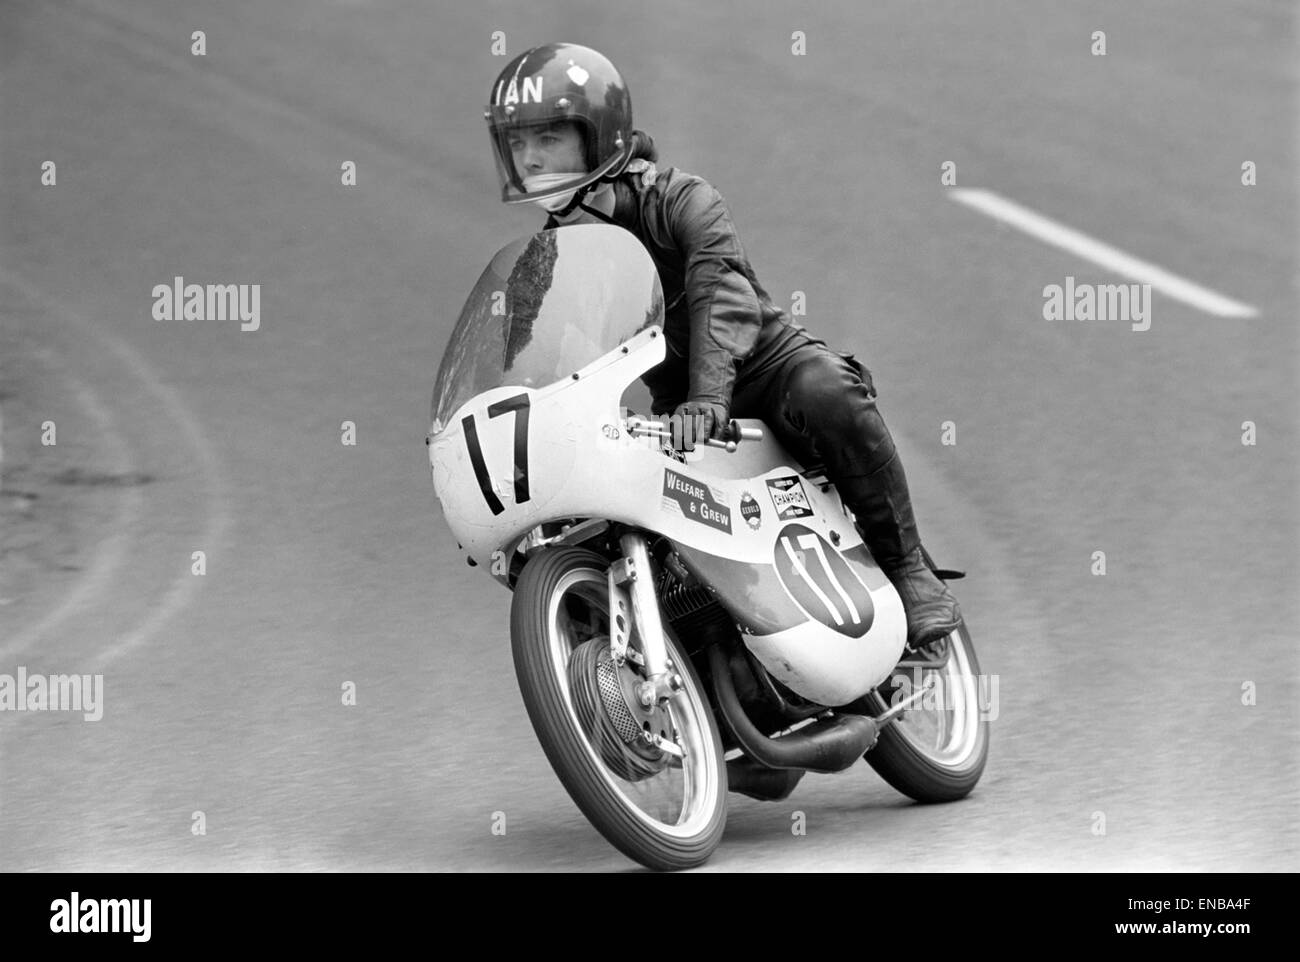 Die International Isle Of Man TT-Rennen, 125ccm Lightweight Ereignis,  Aktion fotografiert im Quartal Brücke biegen, Juni 1971 Stockfotografie -  Alamy